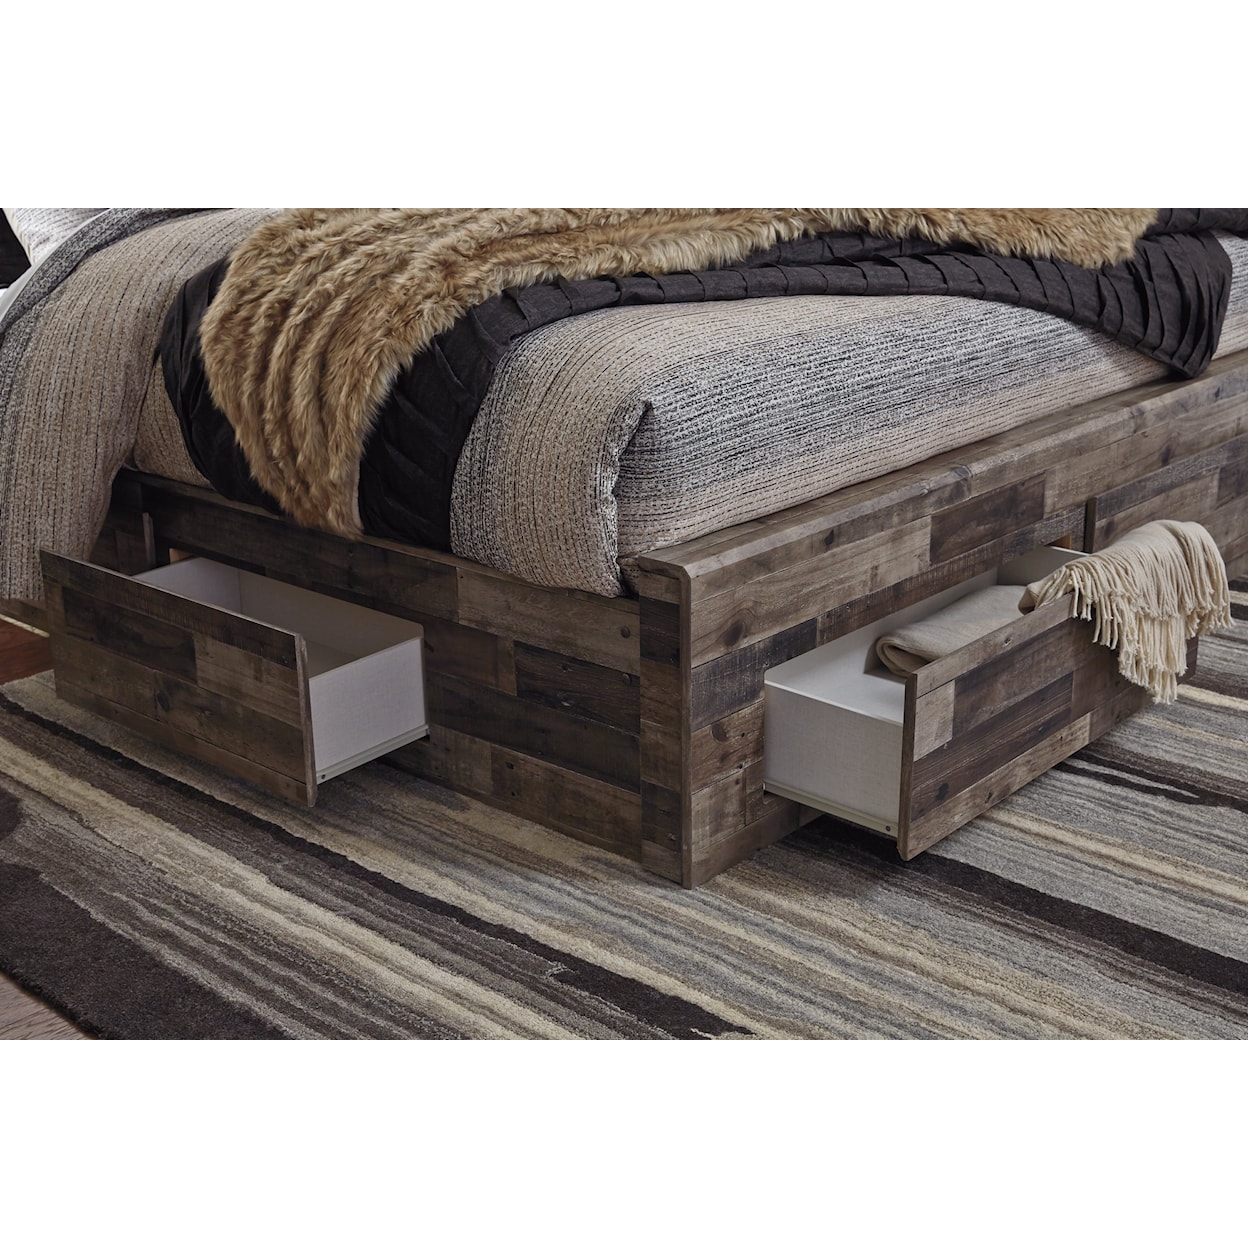 Ashley Furniture Benchcraft Derekson King Panel Bed with 4 Storage Drawers